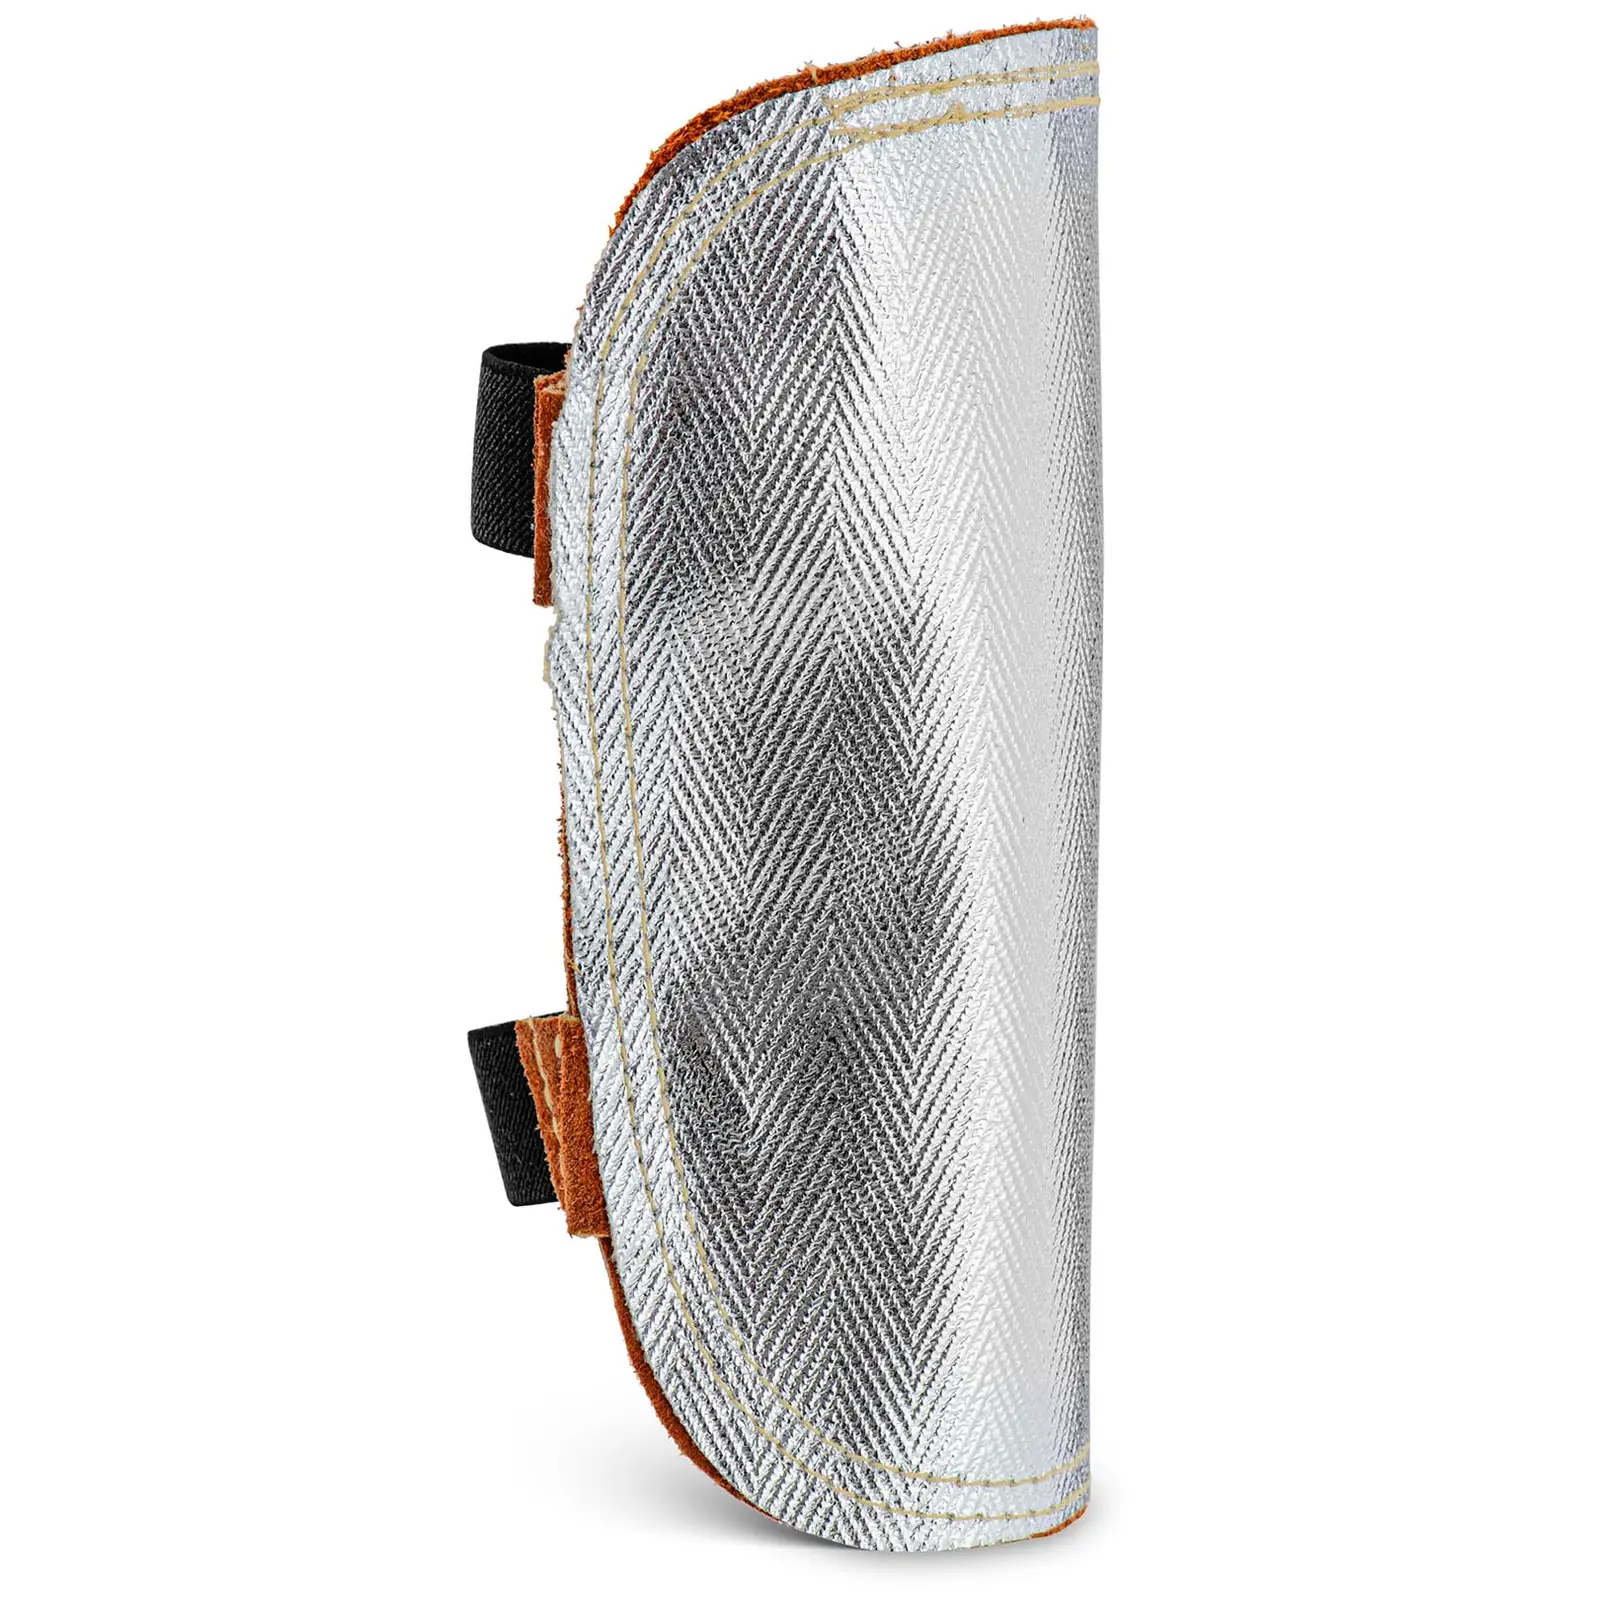 Welding Hand Shield - lined with fiberglass - 25 x 13 cm